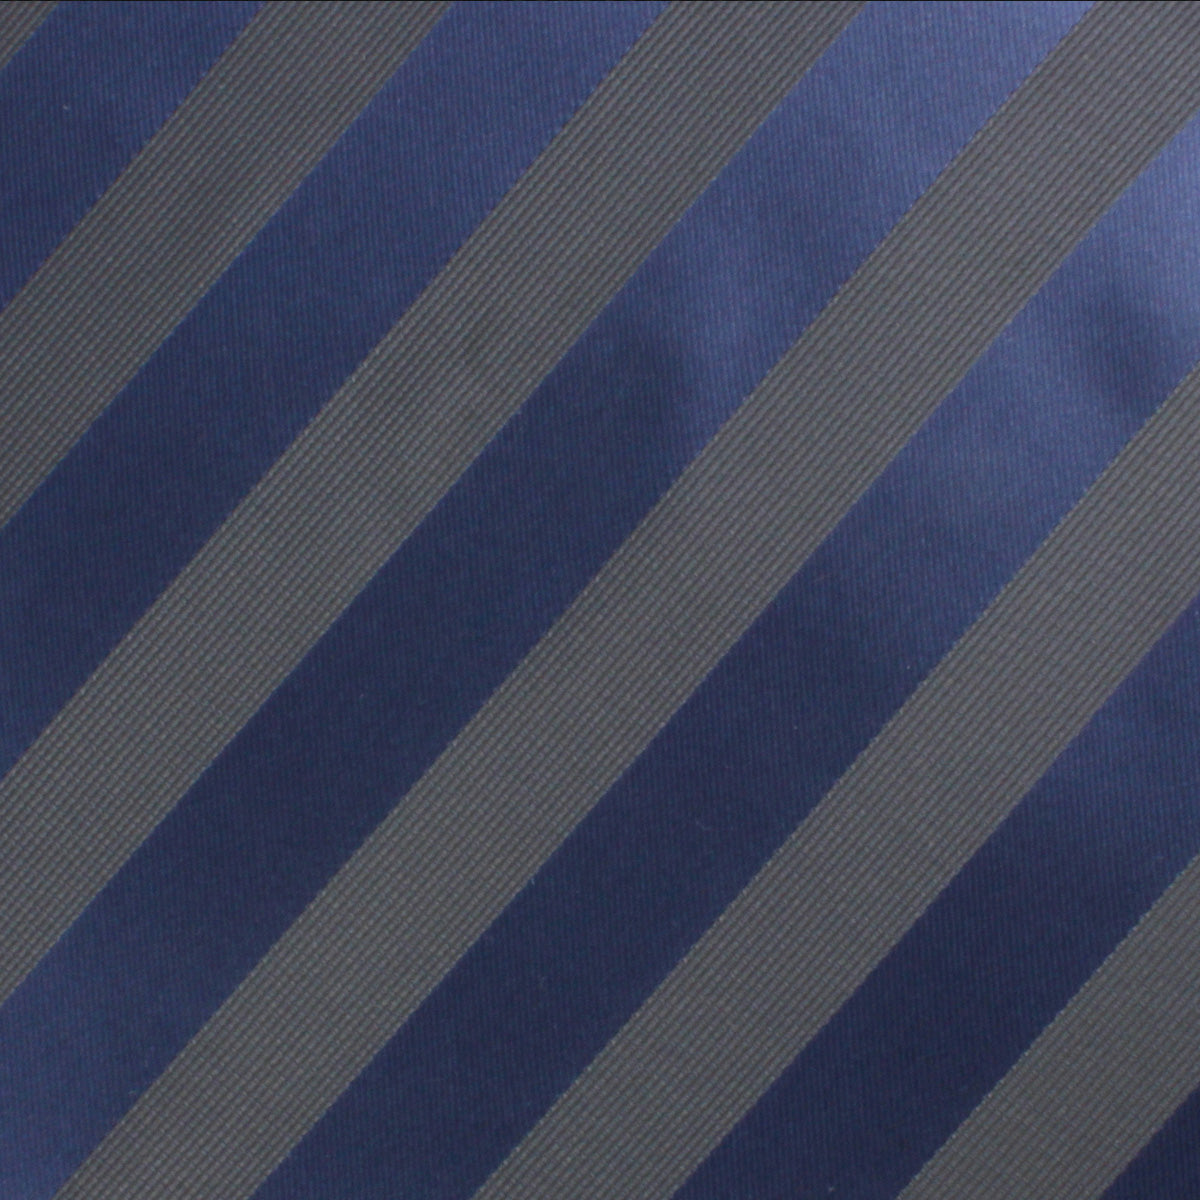 Indigo Blue-Black Striped Bow Tie Fabric